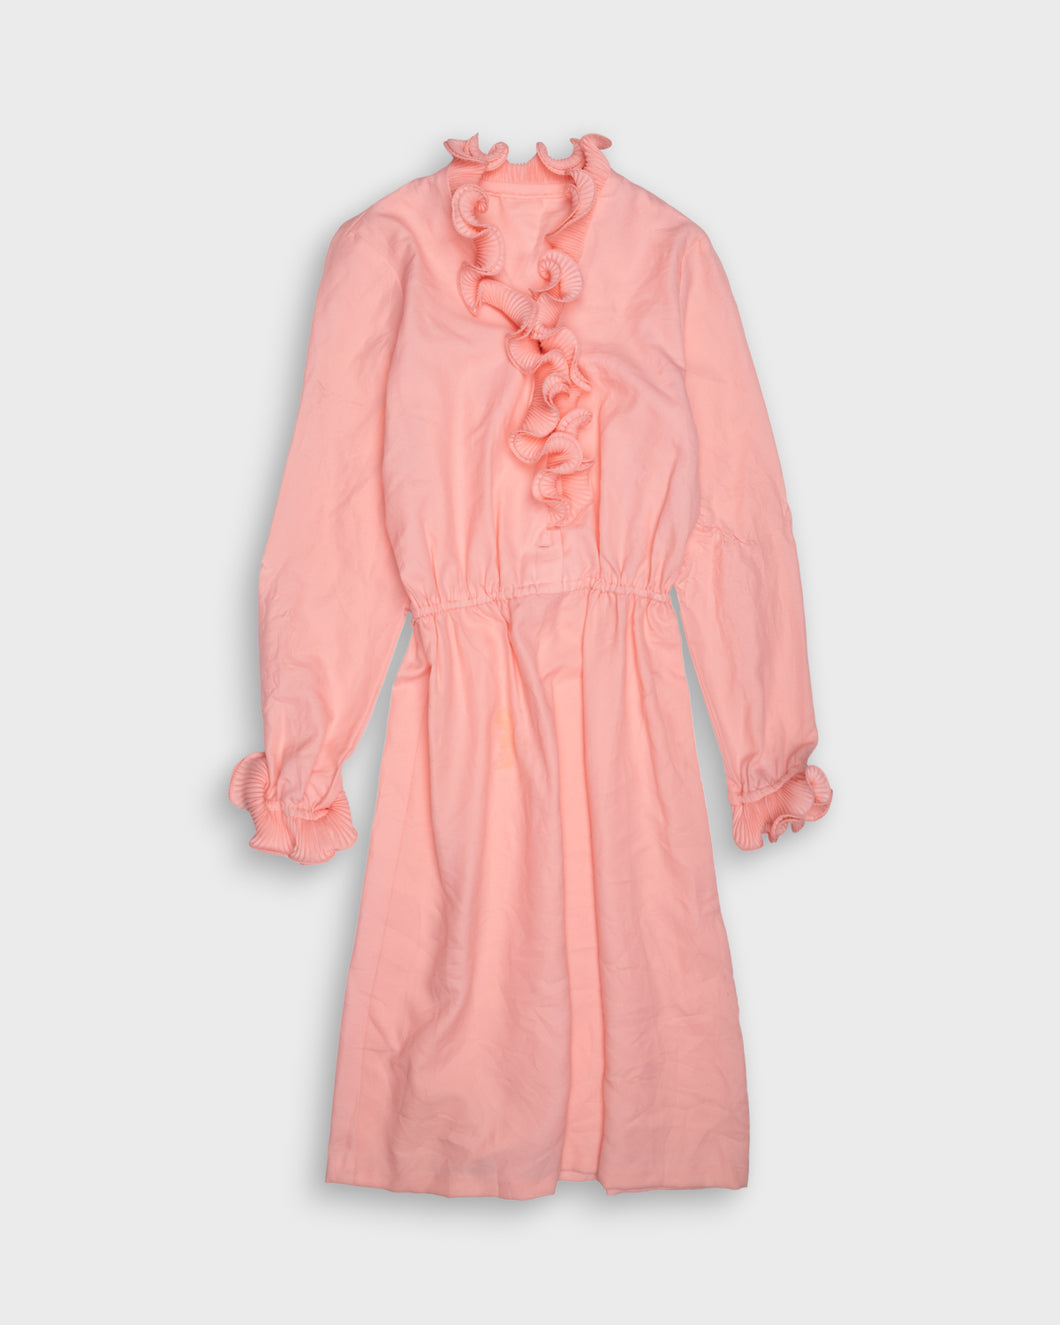 Coral pink ruffled long sleeve dress